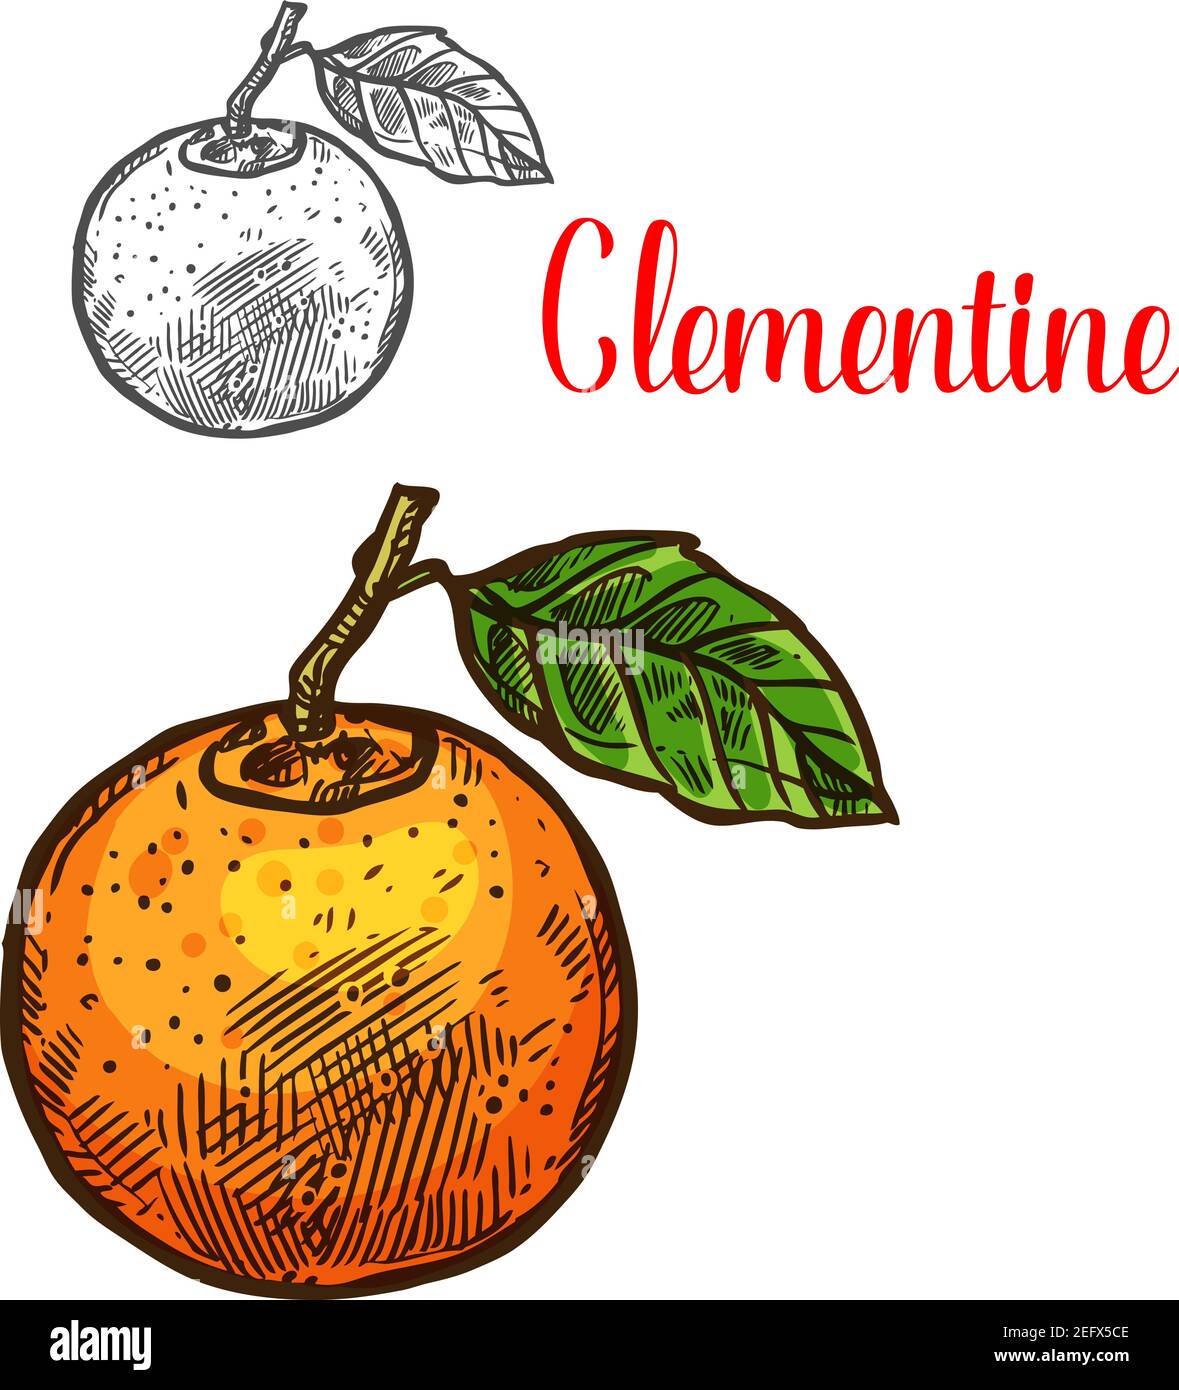 Clementine citrus fruit sketch icon. Vector isolated symbol of fresh whole mandarin or tangerine orange fruit botanical design for fruits dessert or f Stock Vector